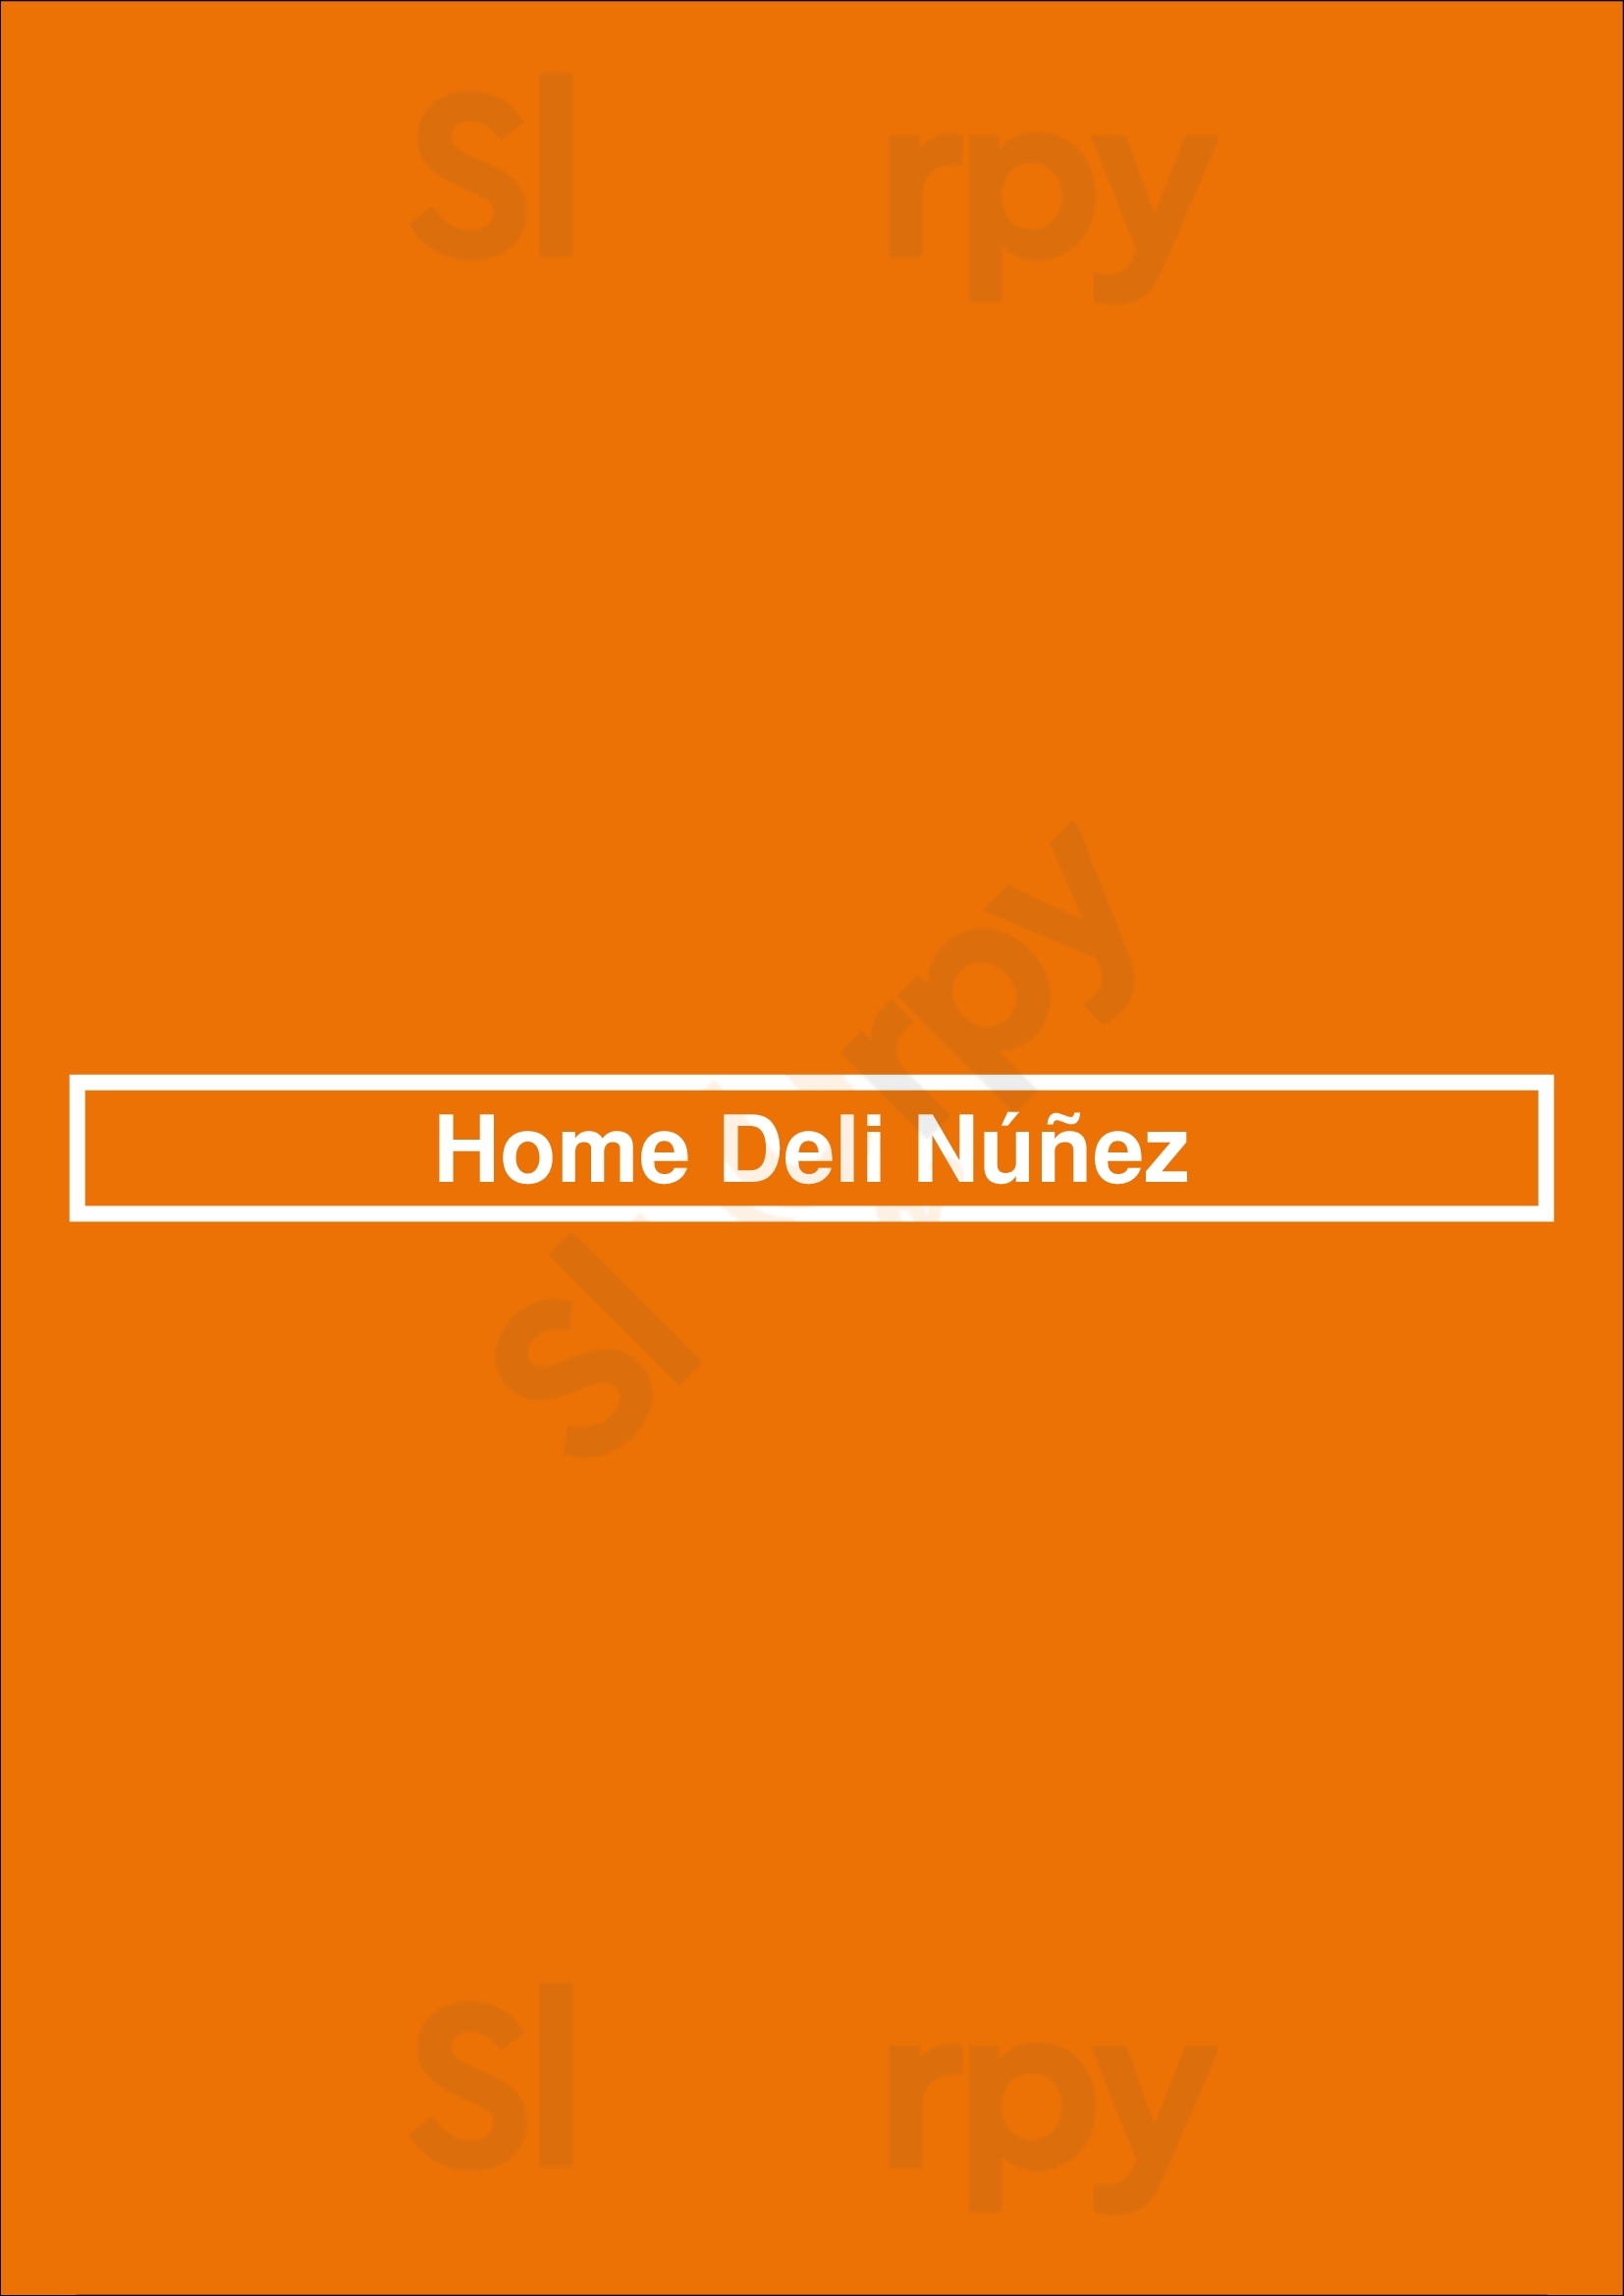 Home Deli Núñez Buenos Aires Menu - 1